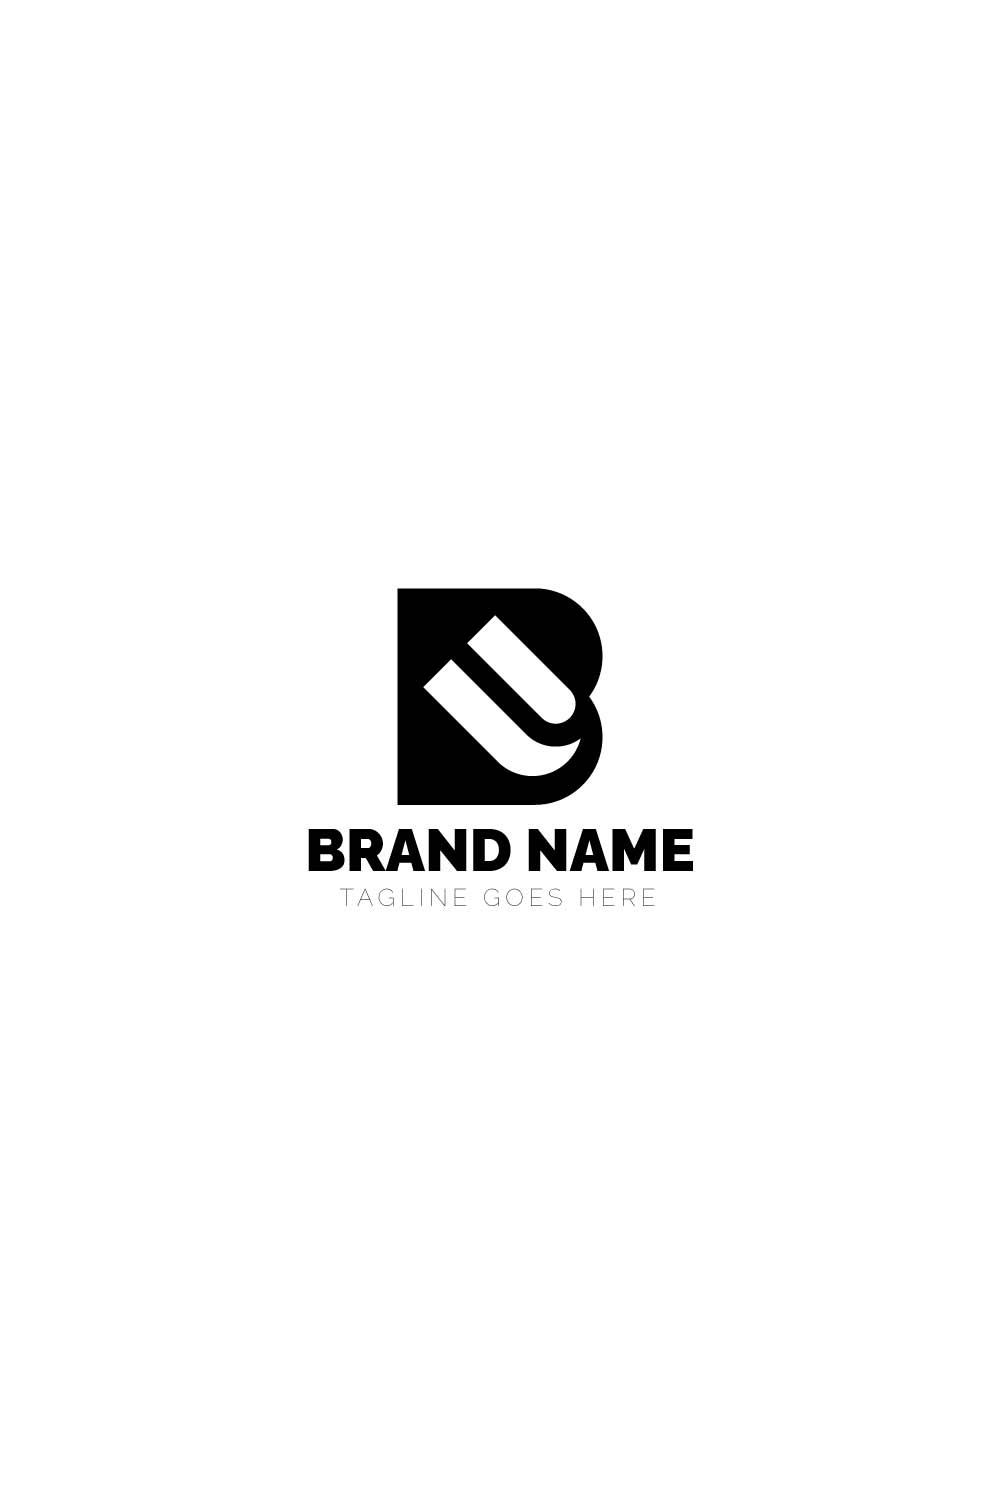 Professional Letter BU Logo design pinterest preview image.